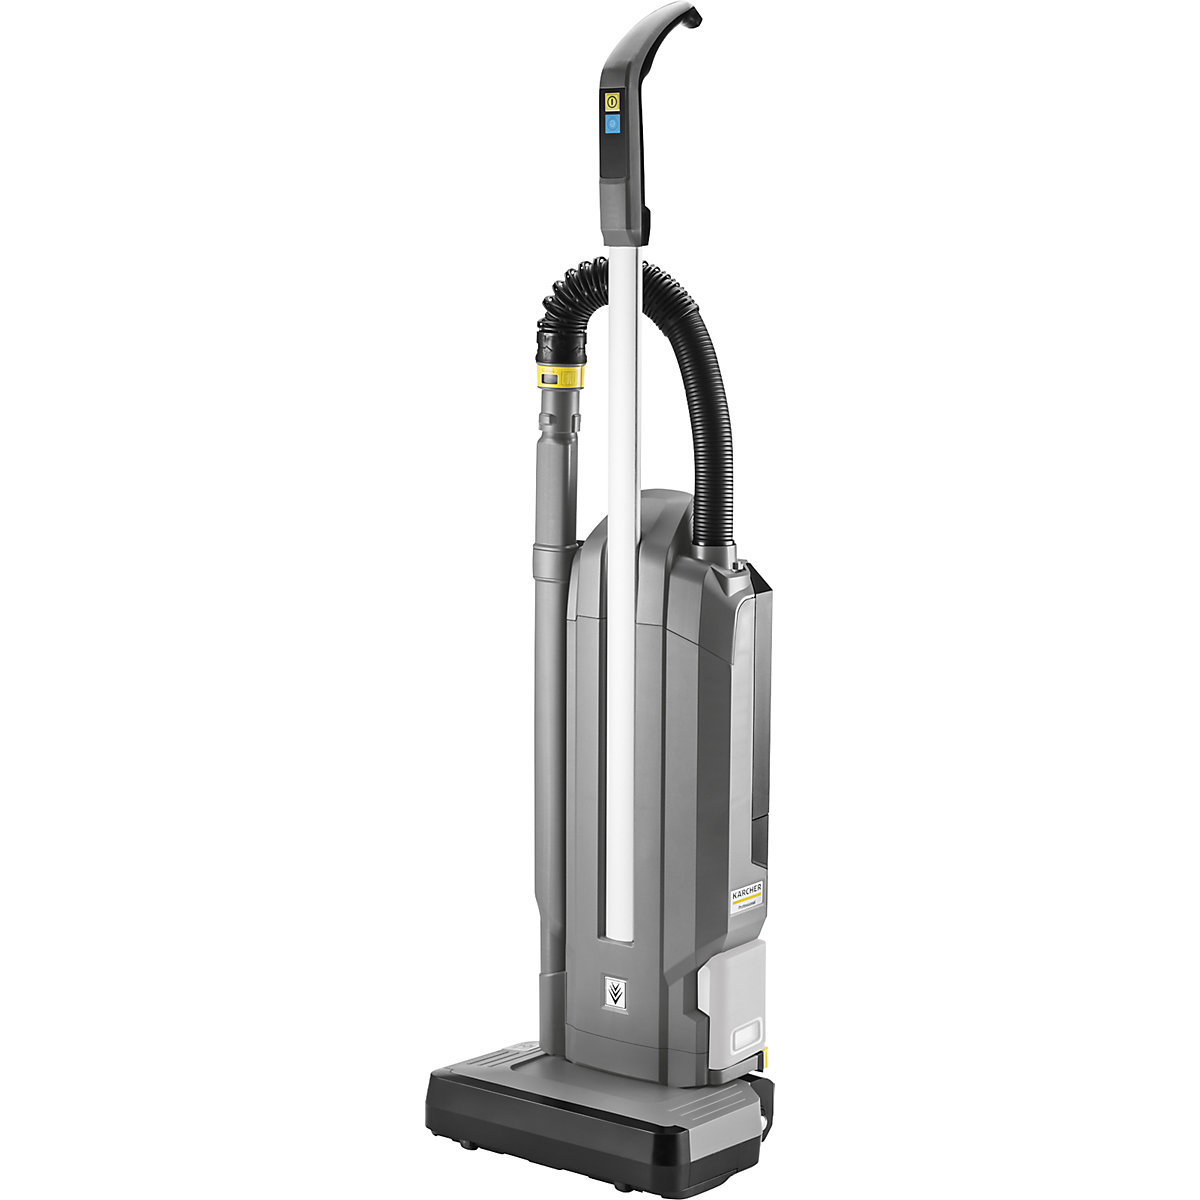 Cordless upright vacuum cleaner – Kärcher